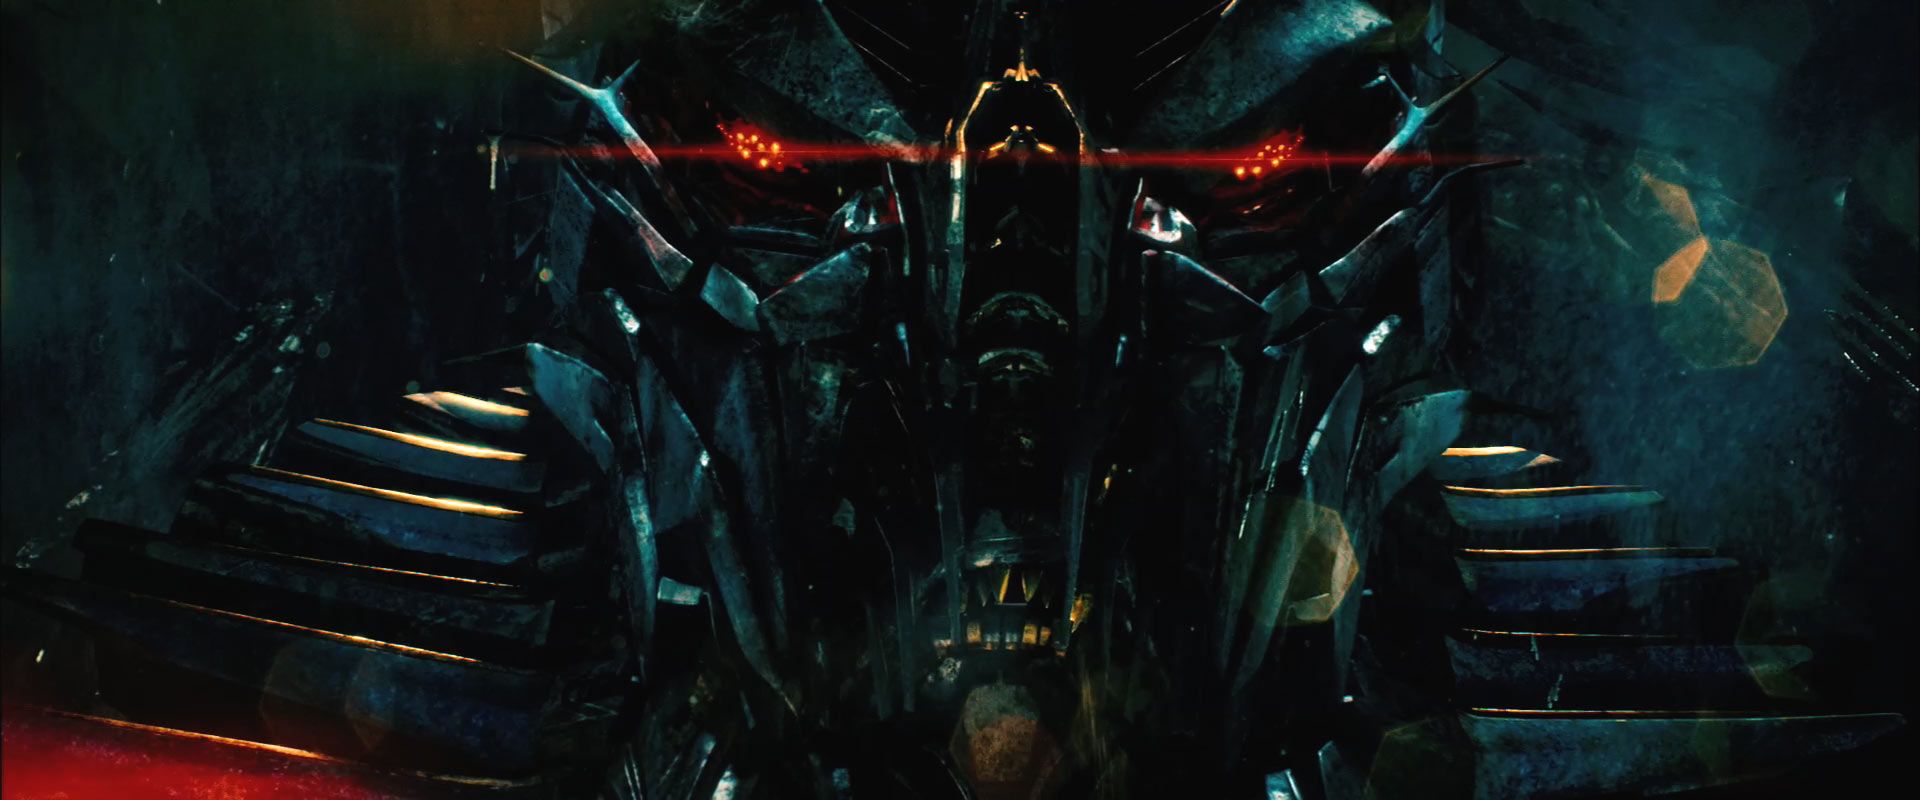 Transformers 2 Trailer Photo #2